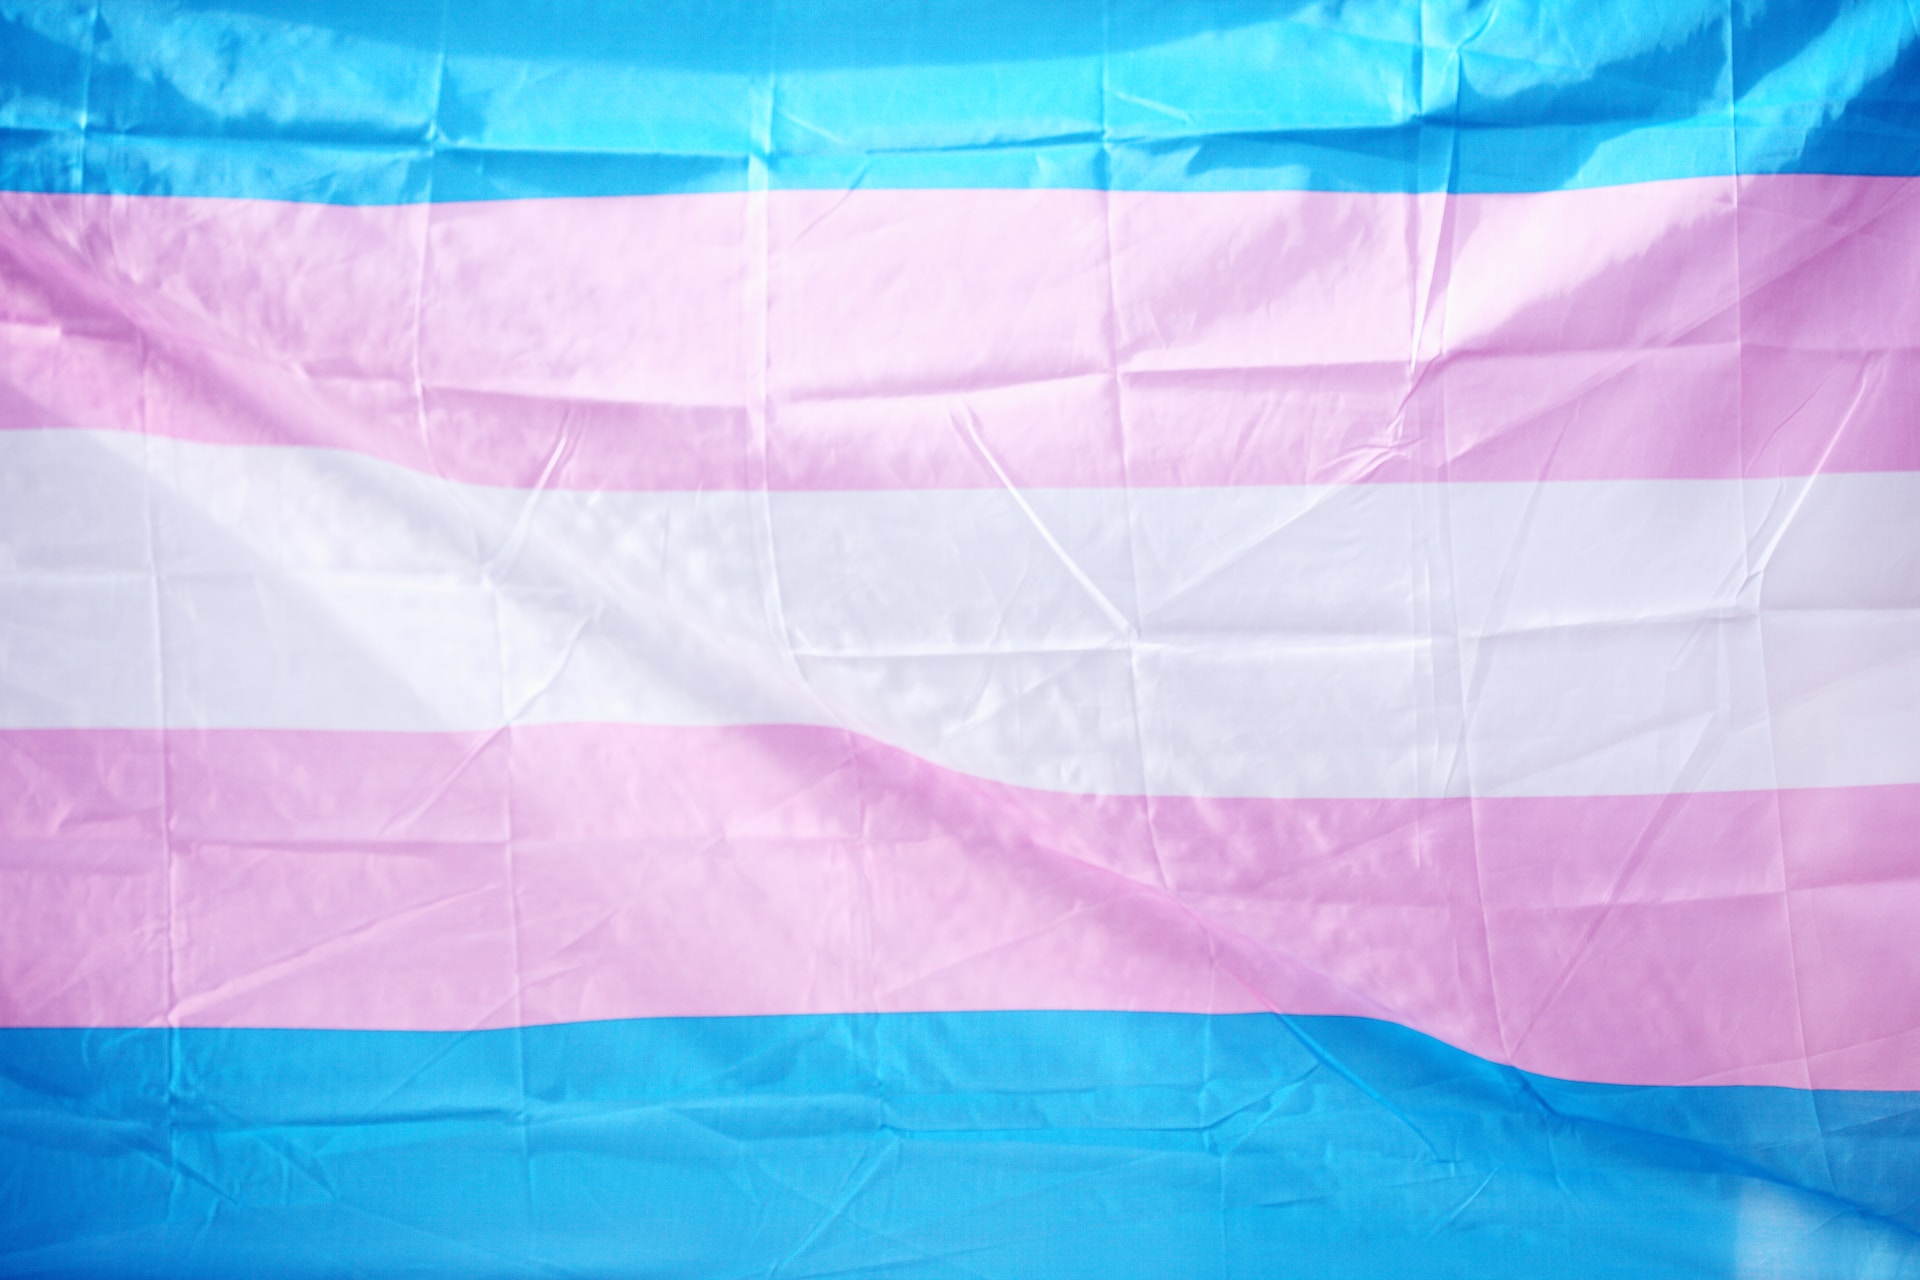 Trans identity flag